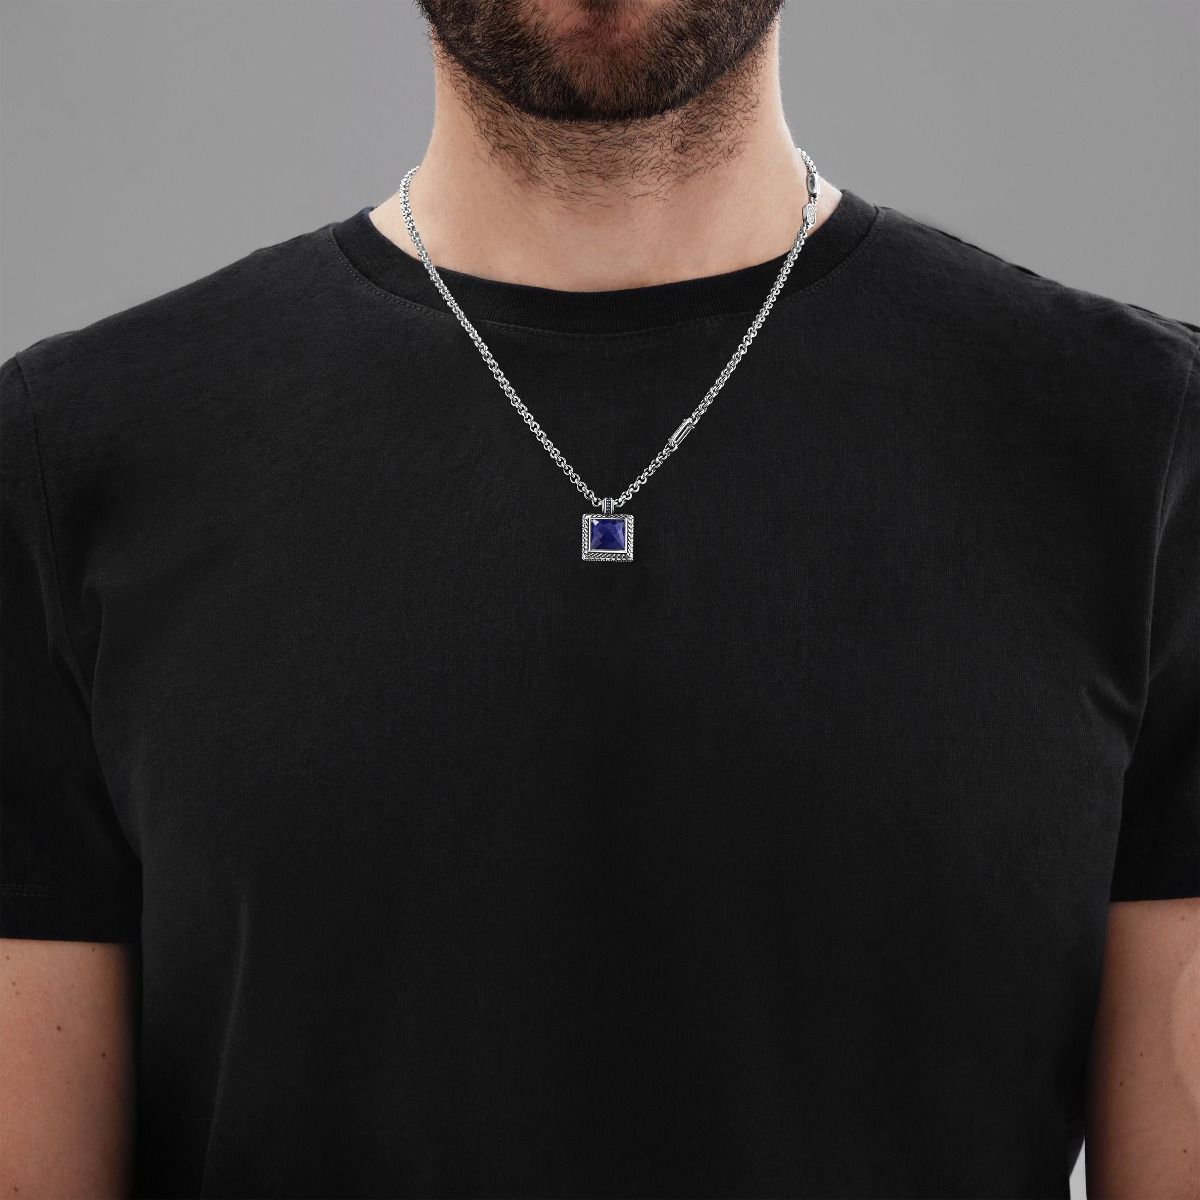 Guardian Necklace